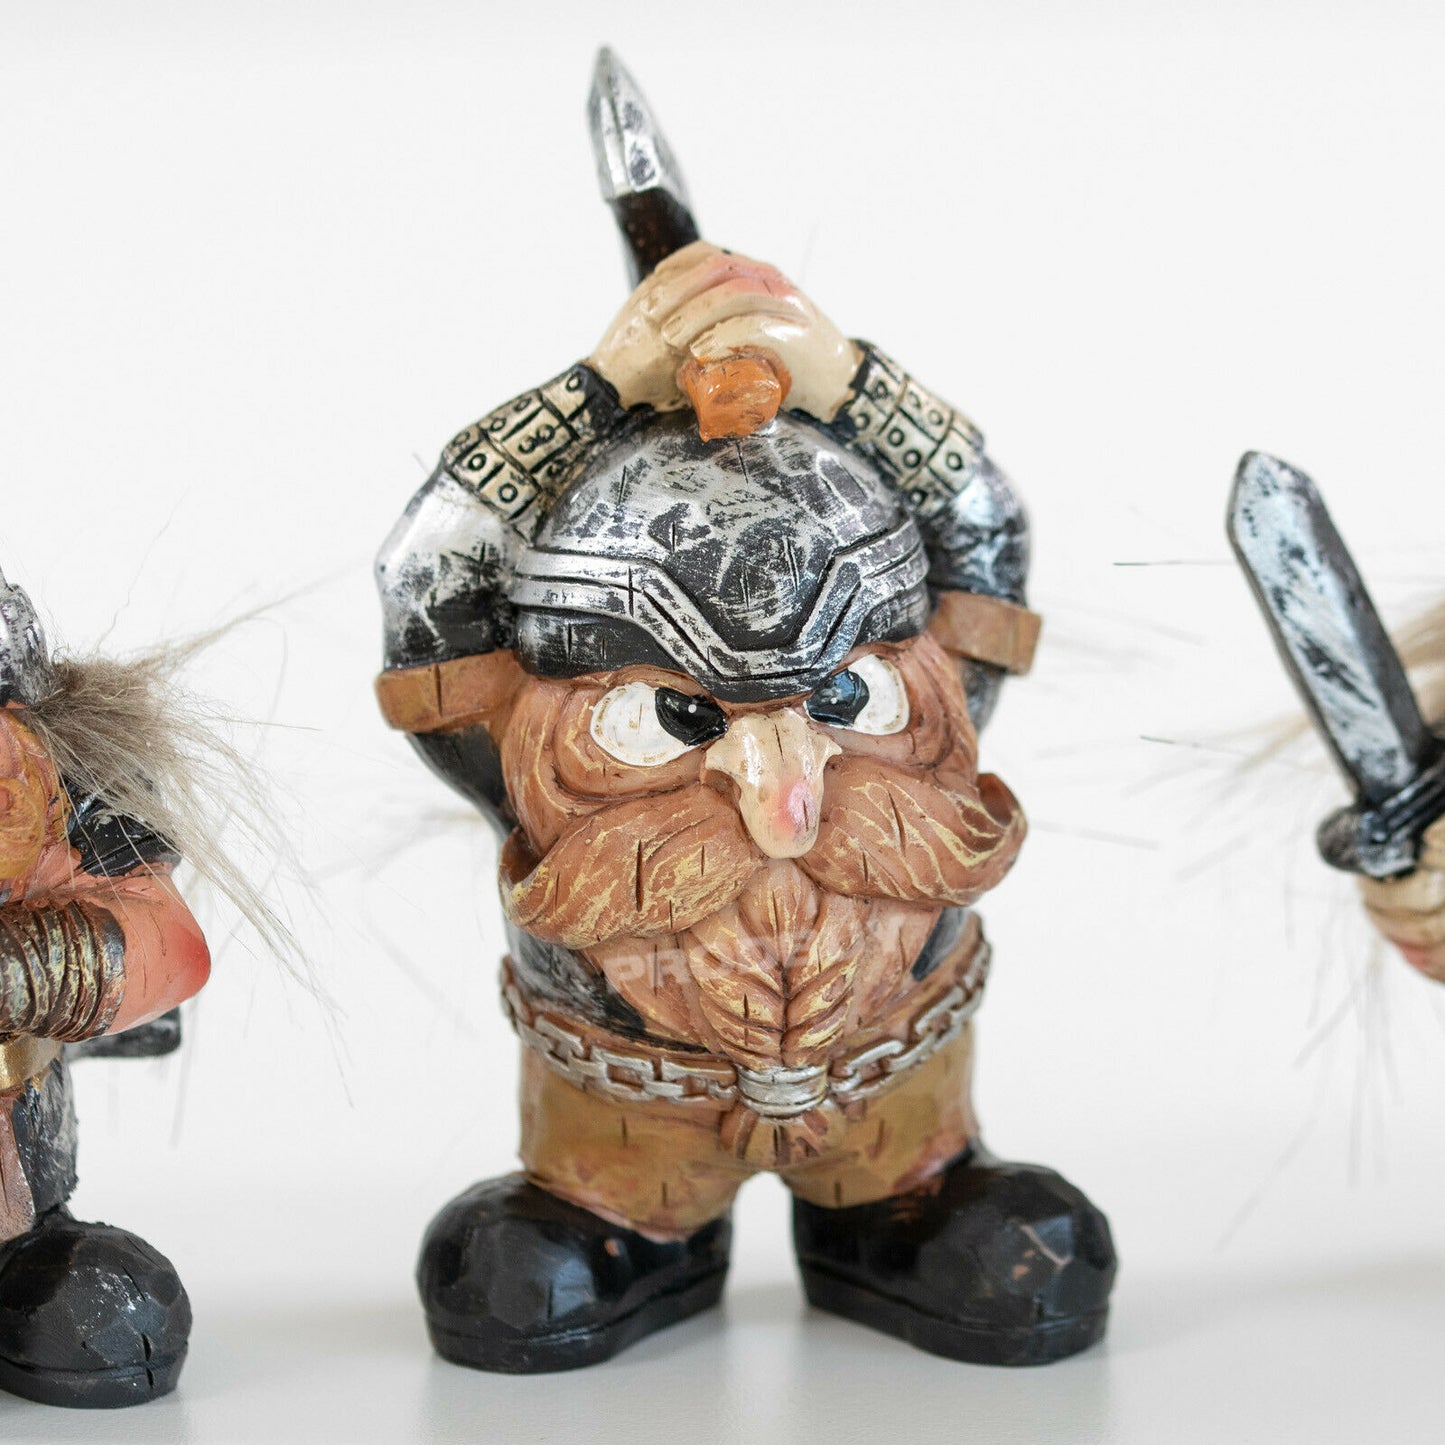 Set of 3 Small Marauding Viking Figurines